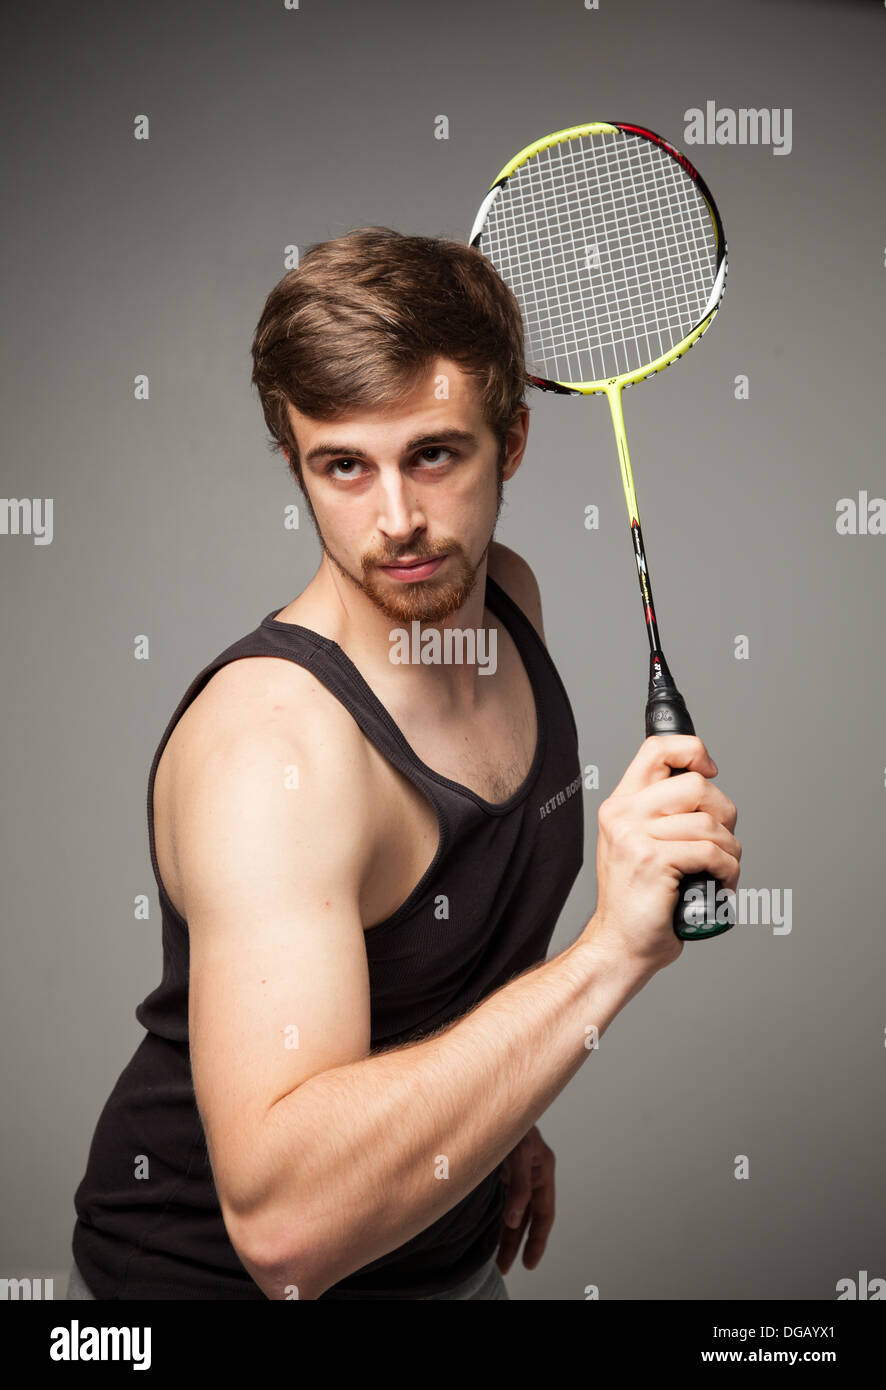 Fit male badminton player model Stock Photo - Alamy